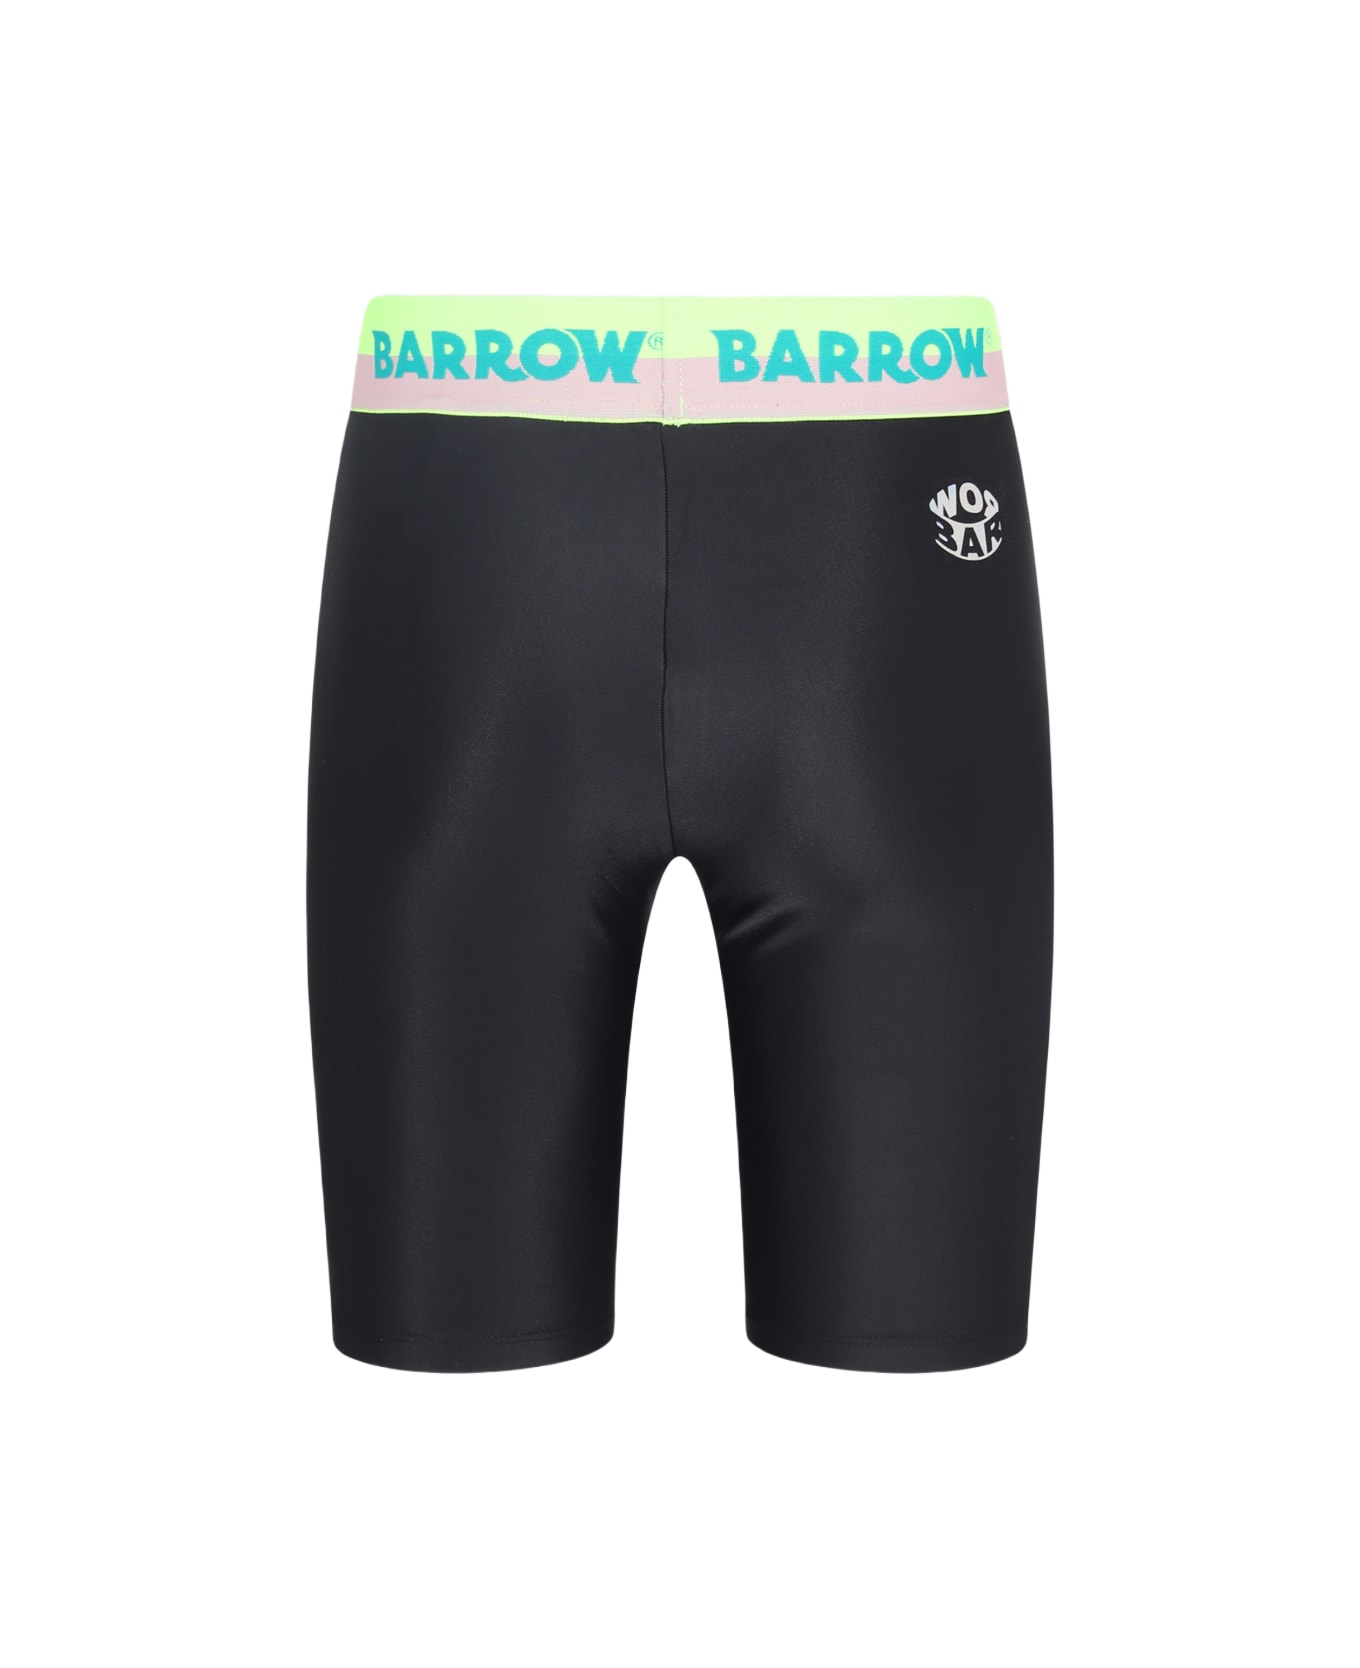 Barrow Black Stretch Shorts - Black